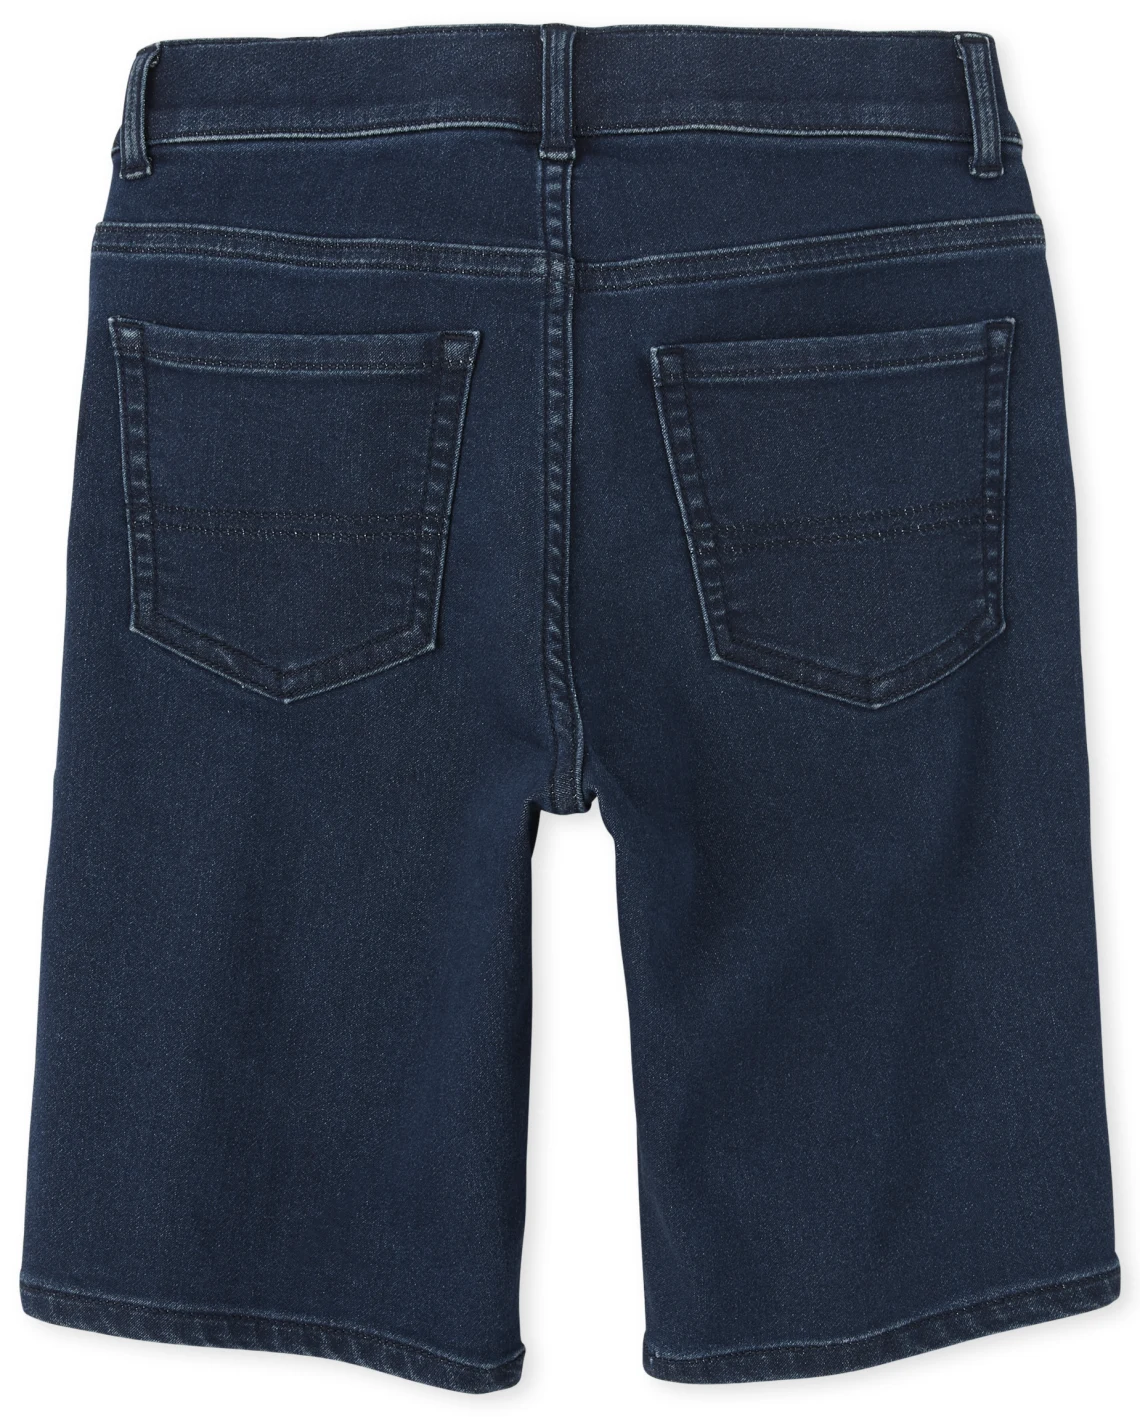 Calzoneta Short Jeans azul childrens place niño